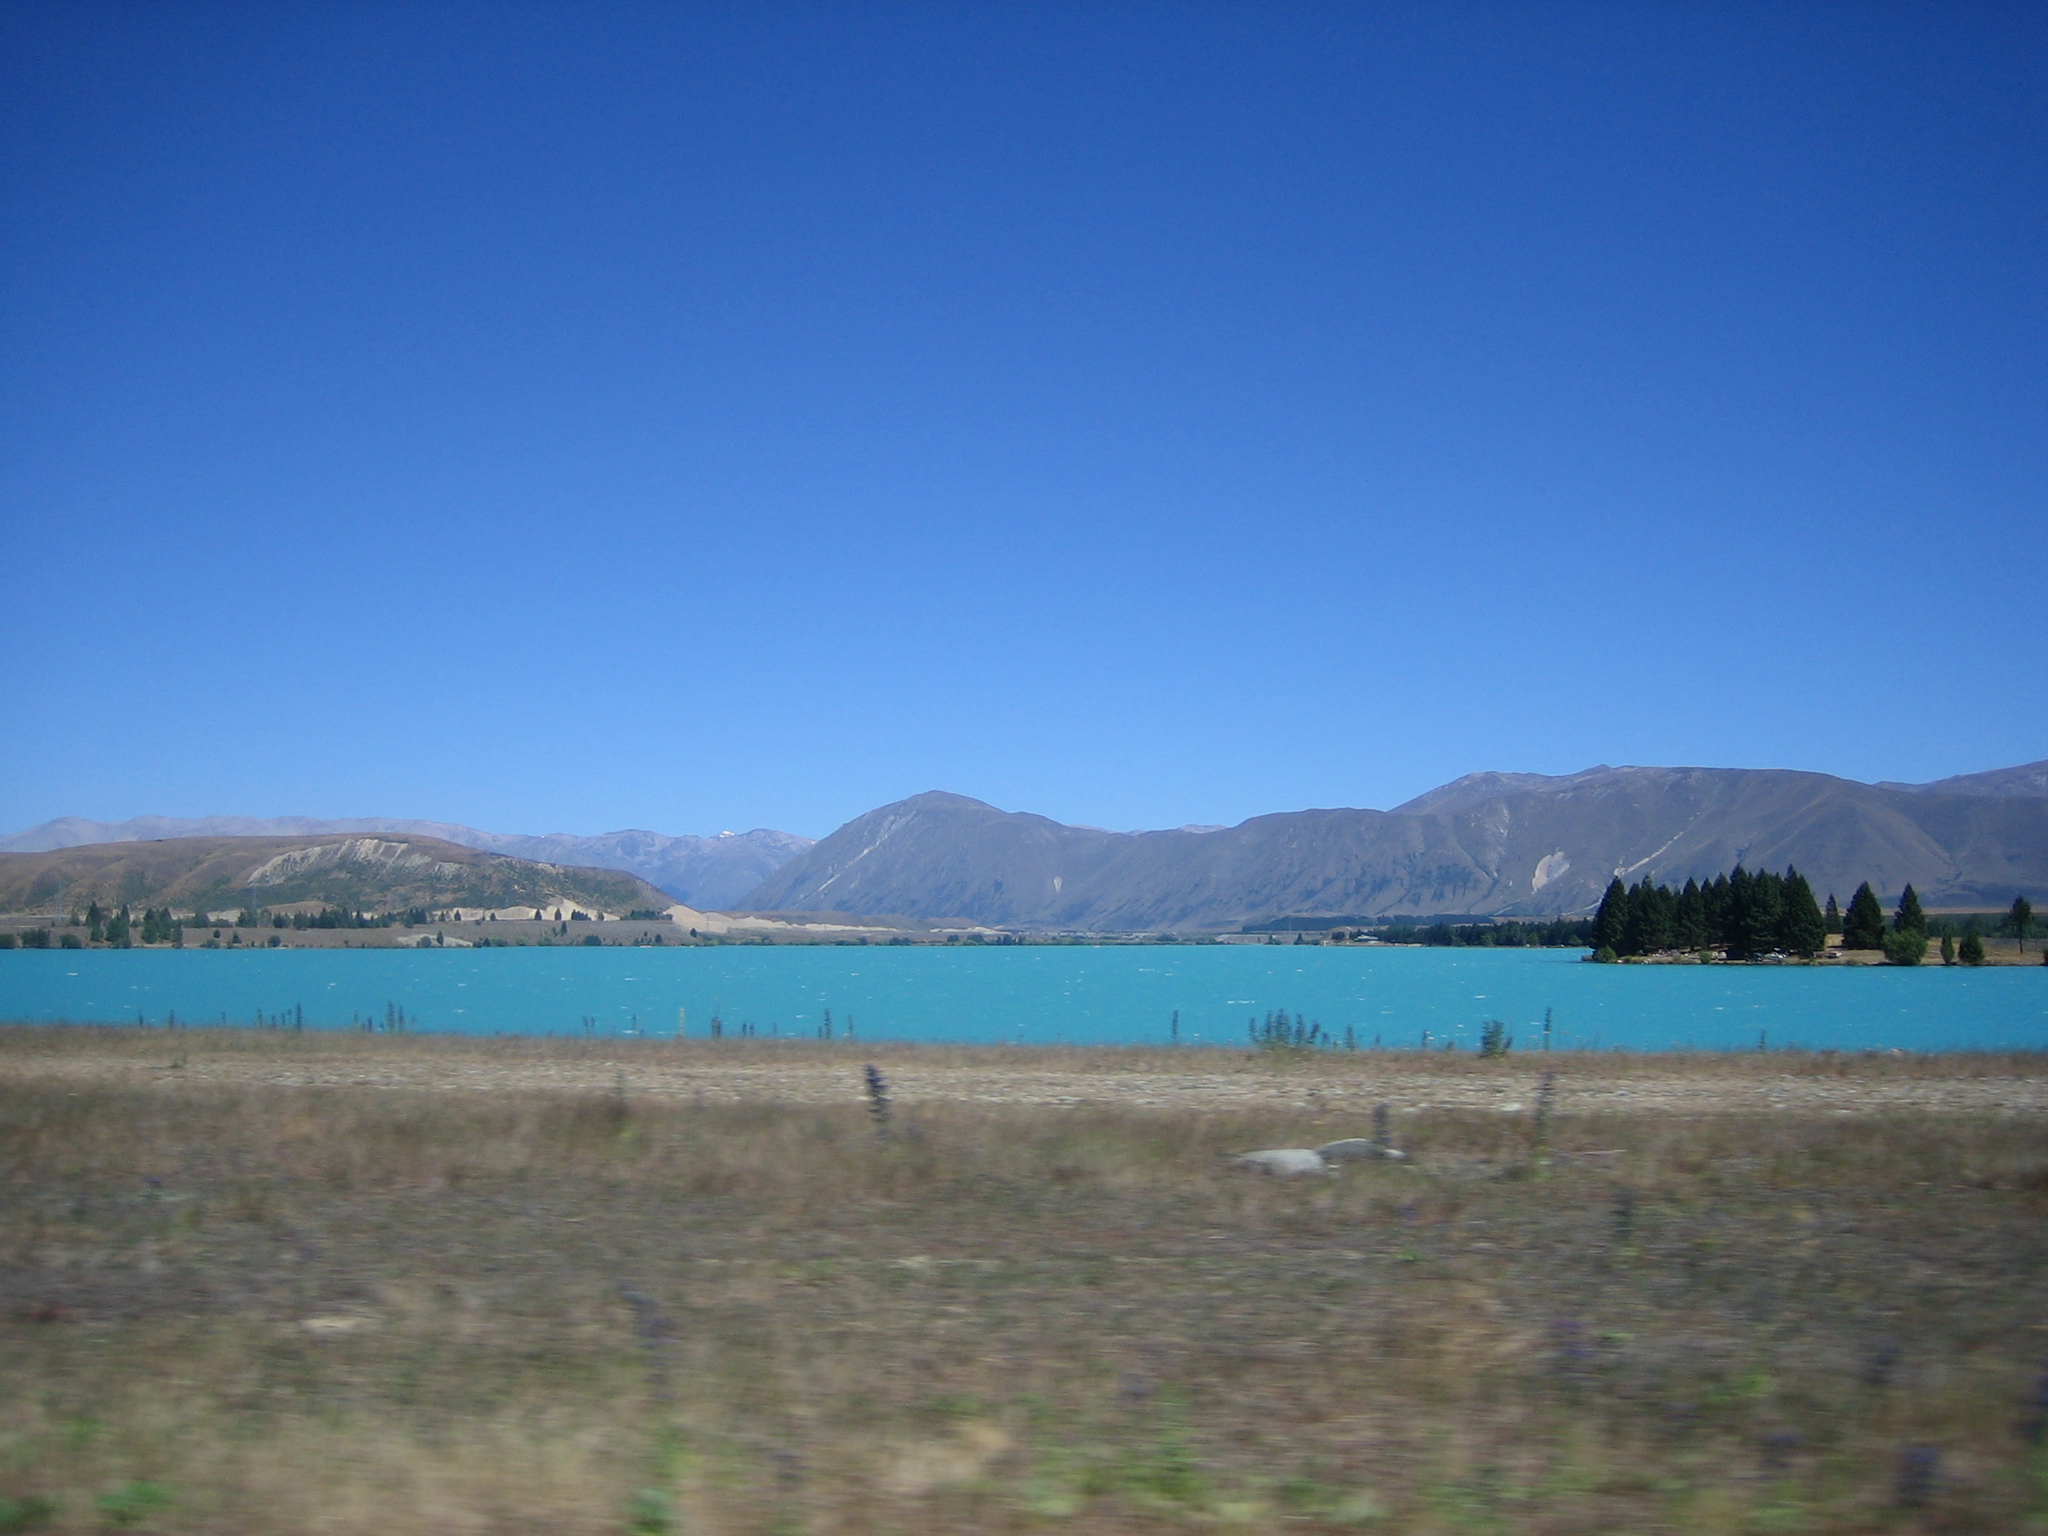 Drive back to Christchurch